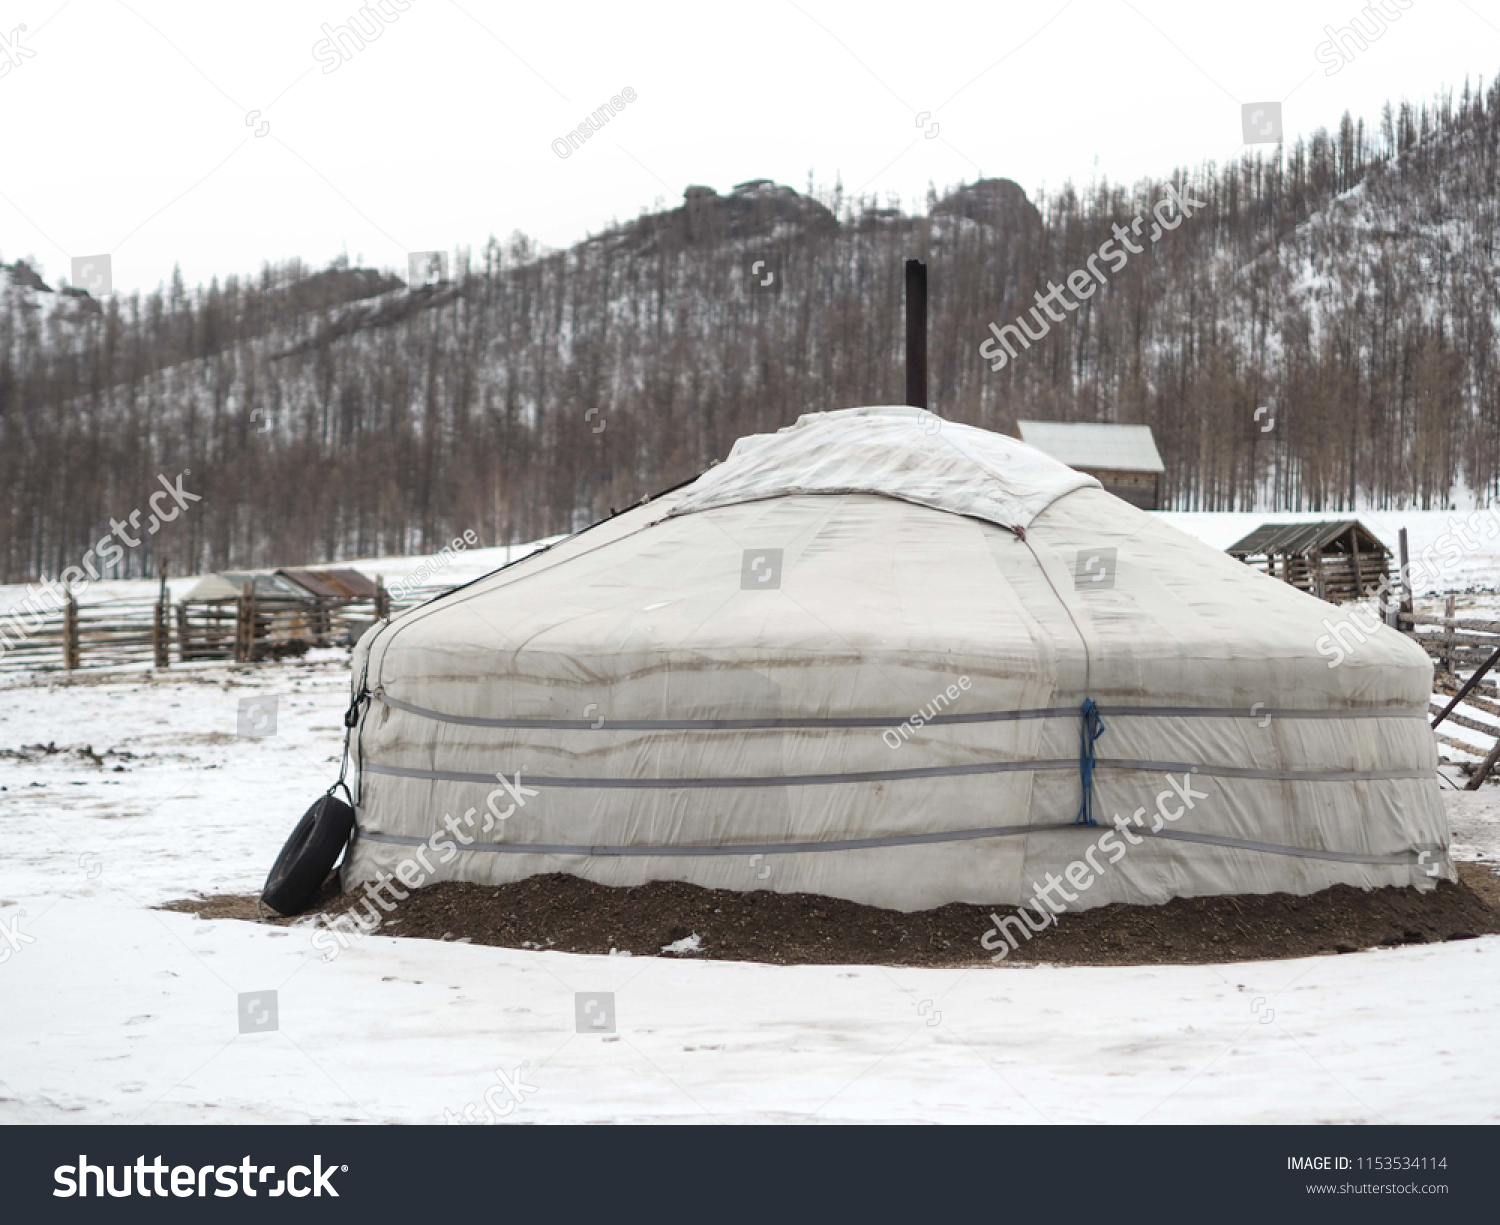 stock-photo-mongolian-yurt-called-a-ger-